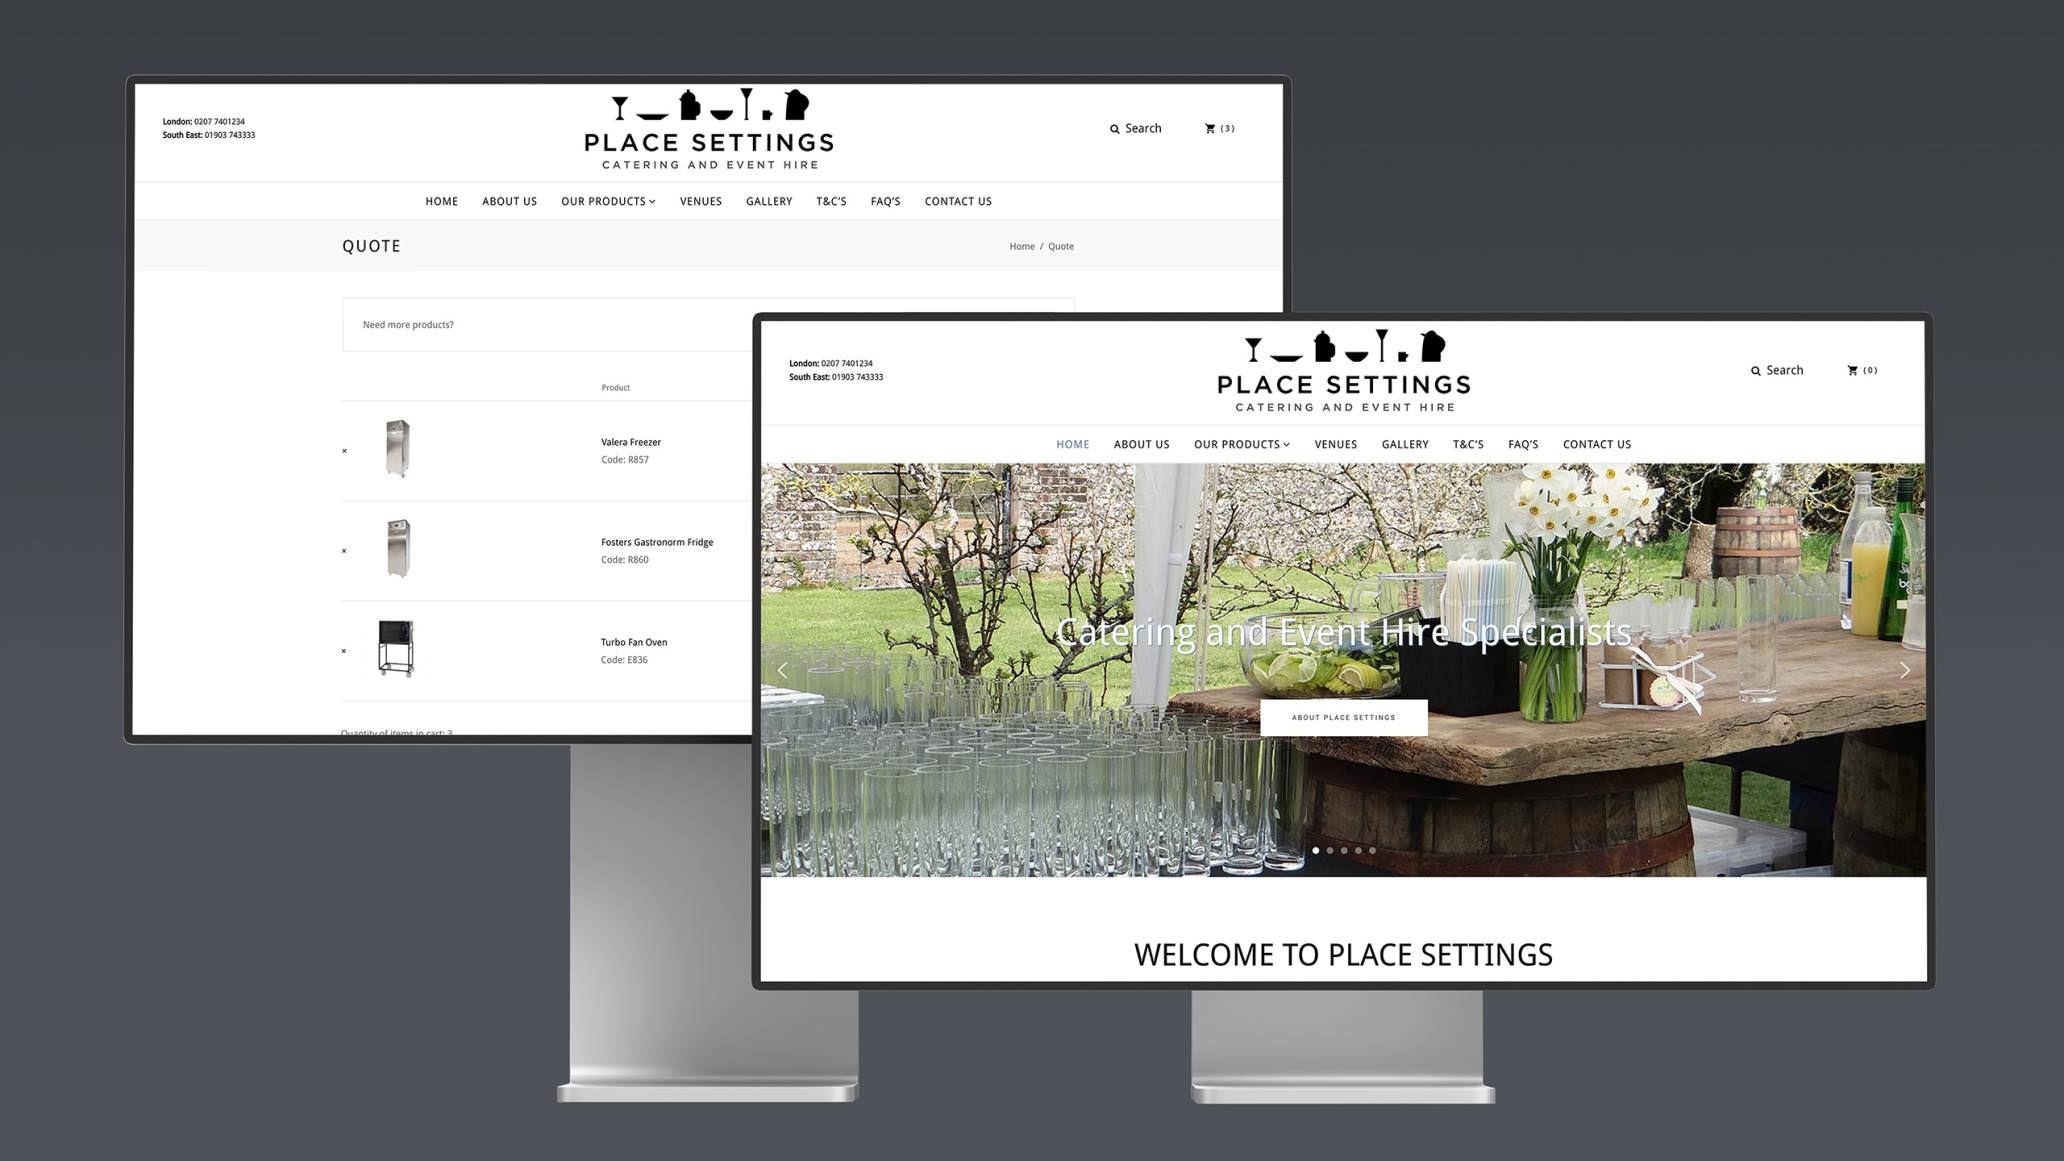 Place Settings - Event Hire Company Web Design